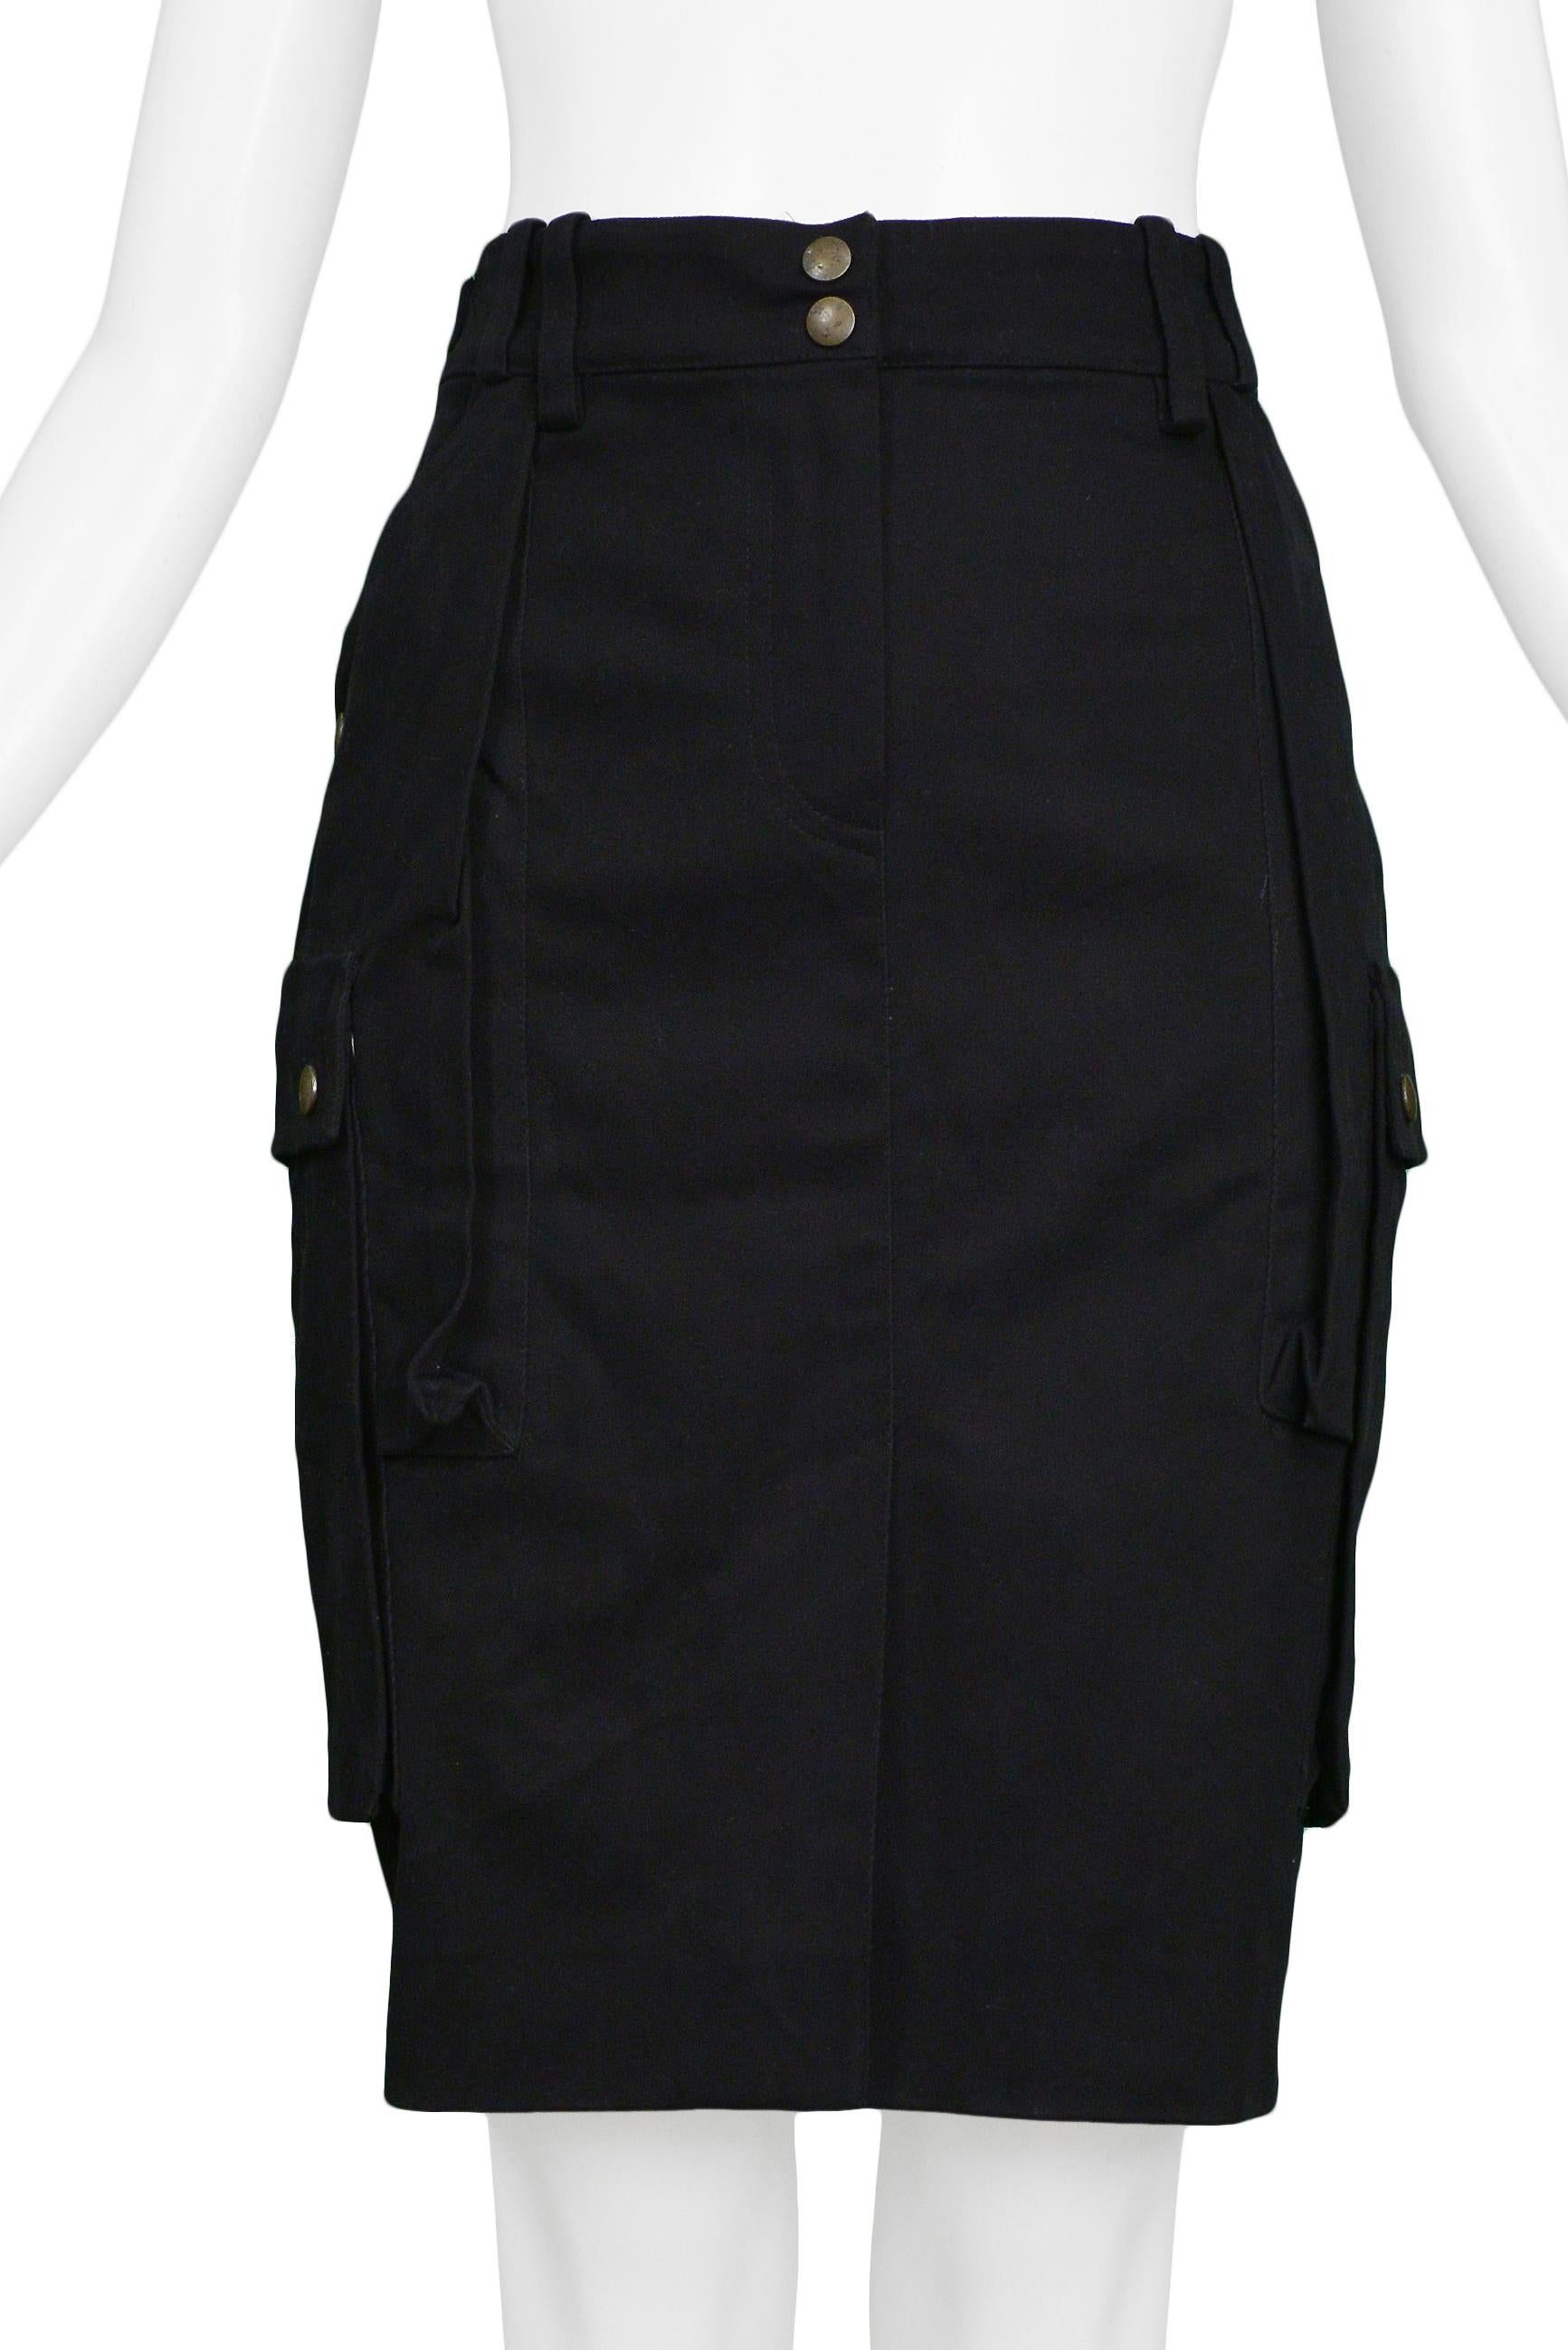 Women's Balenciaga By Ghesquiere Black Cargo Skirt 2002 For Sale